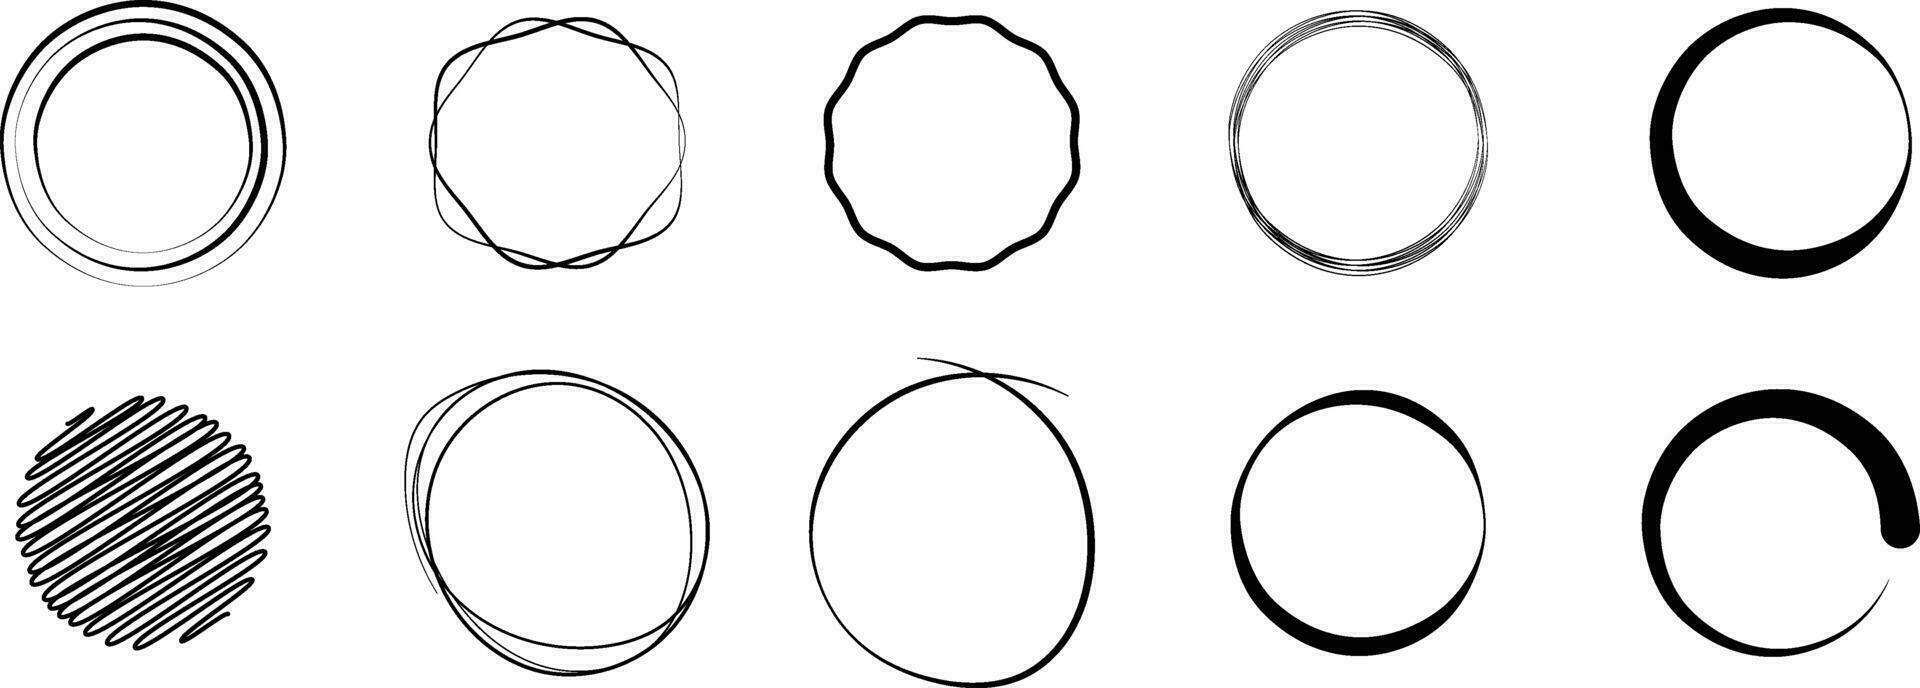 abstrakt cirkel ram design element. dekorativ Foto ram bunt vektor